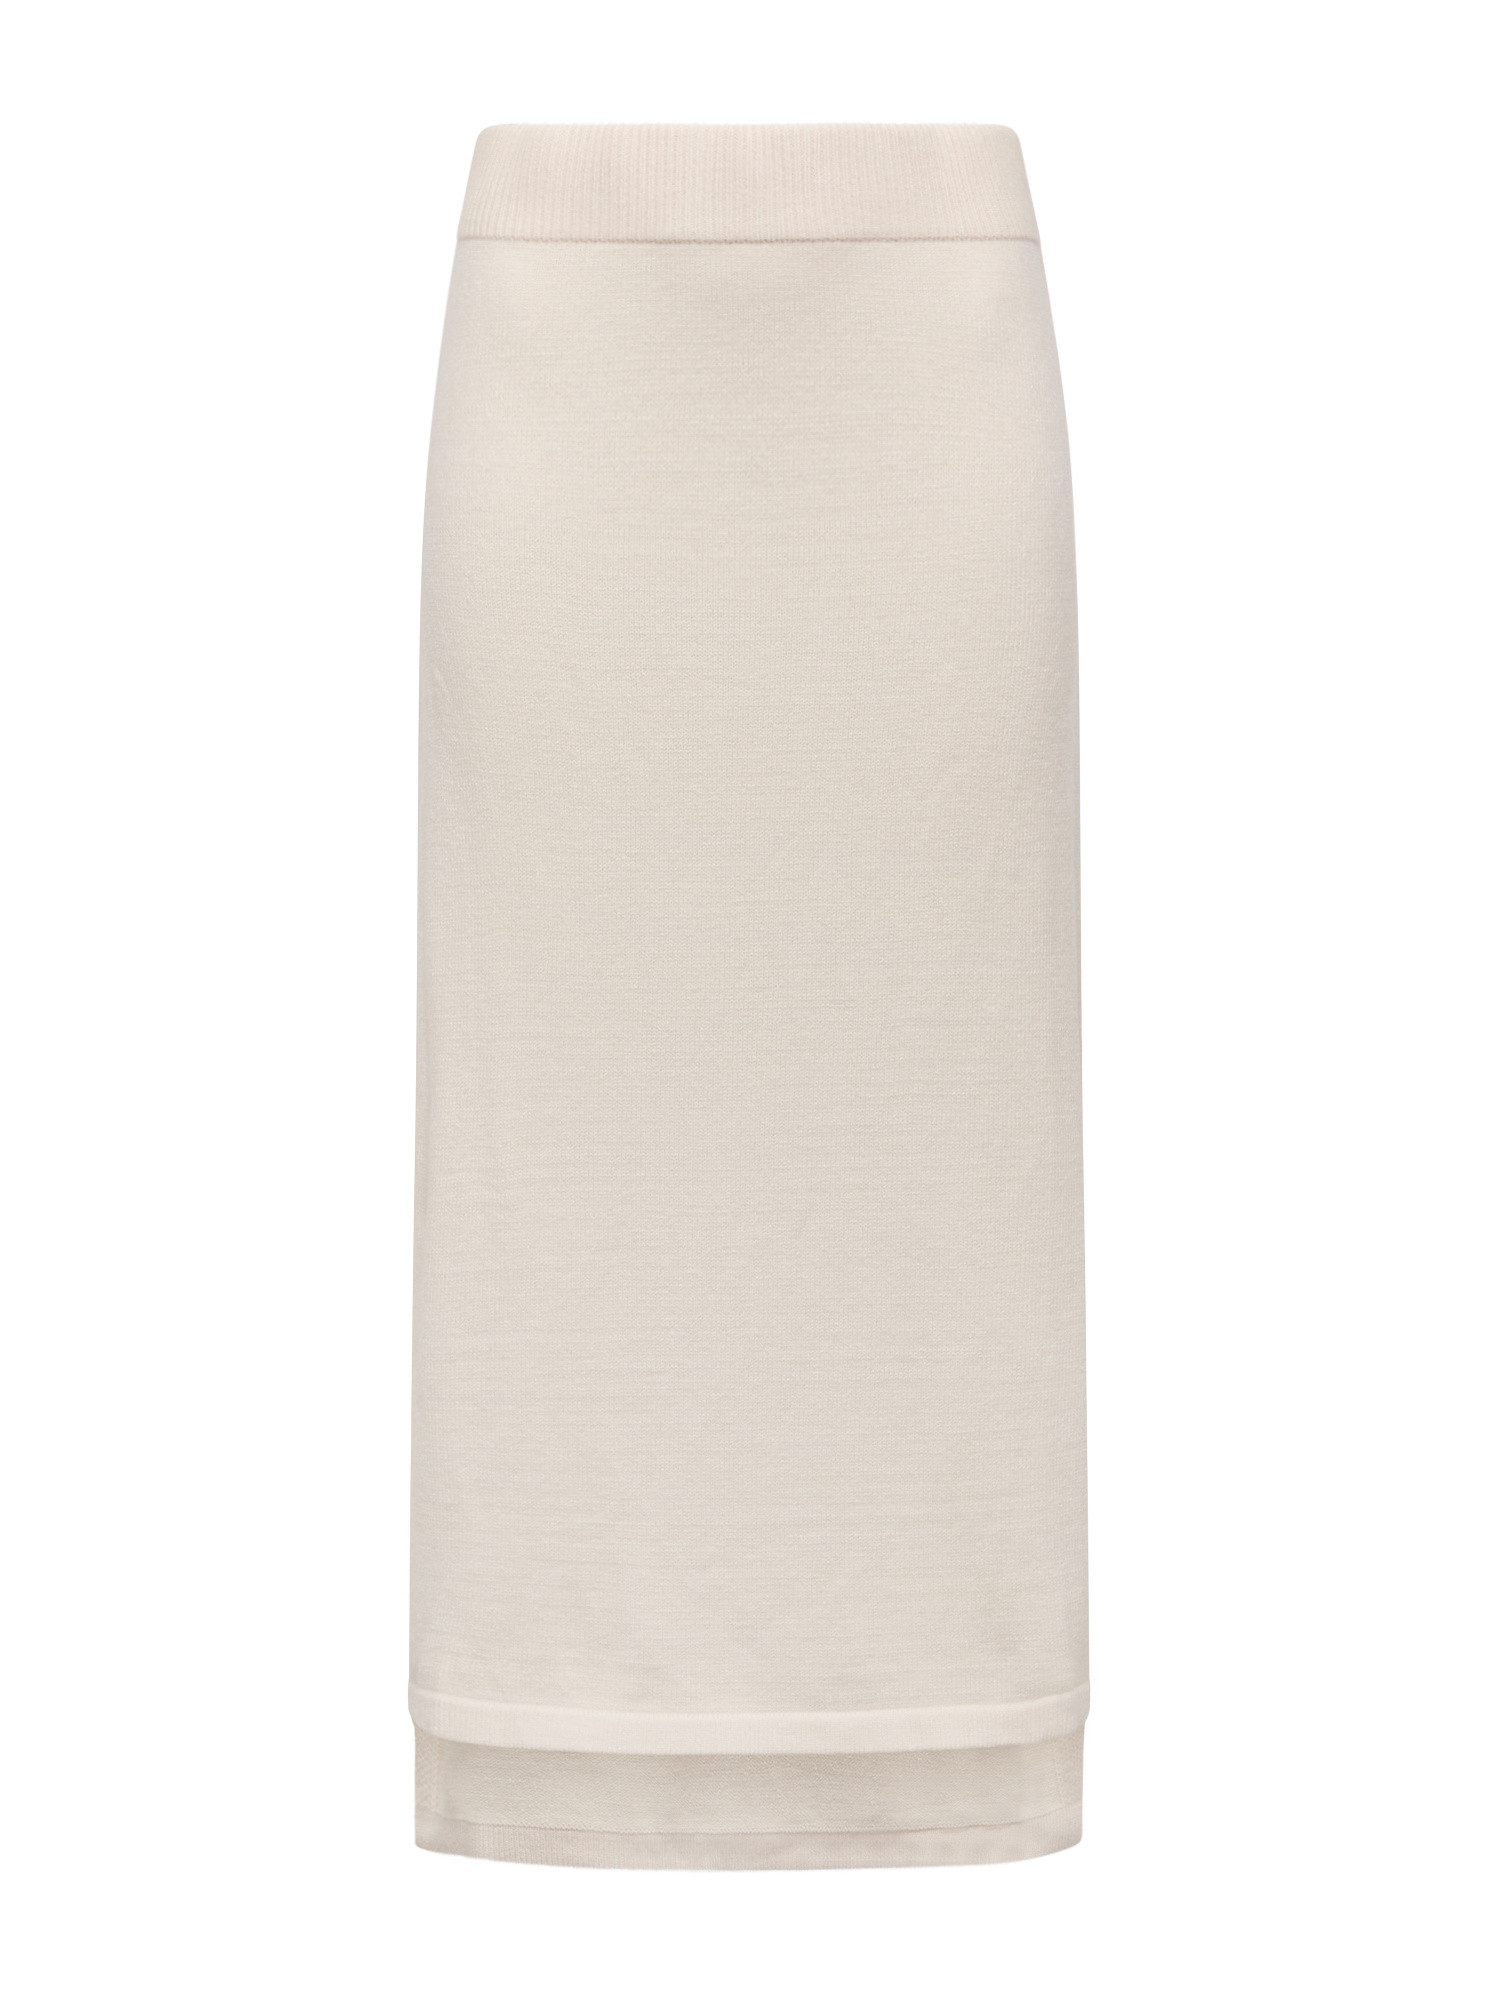 Koan - Knitted midi skirt, White Cream, large image number 0